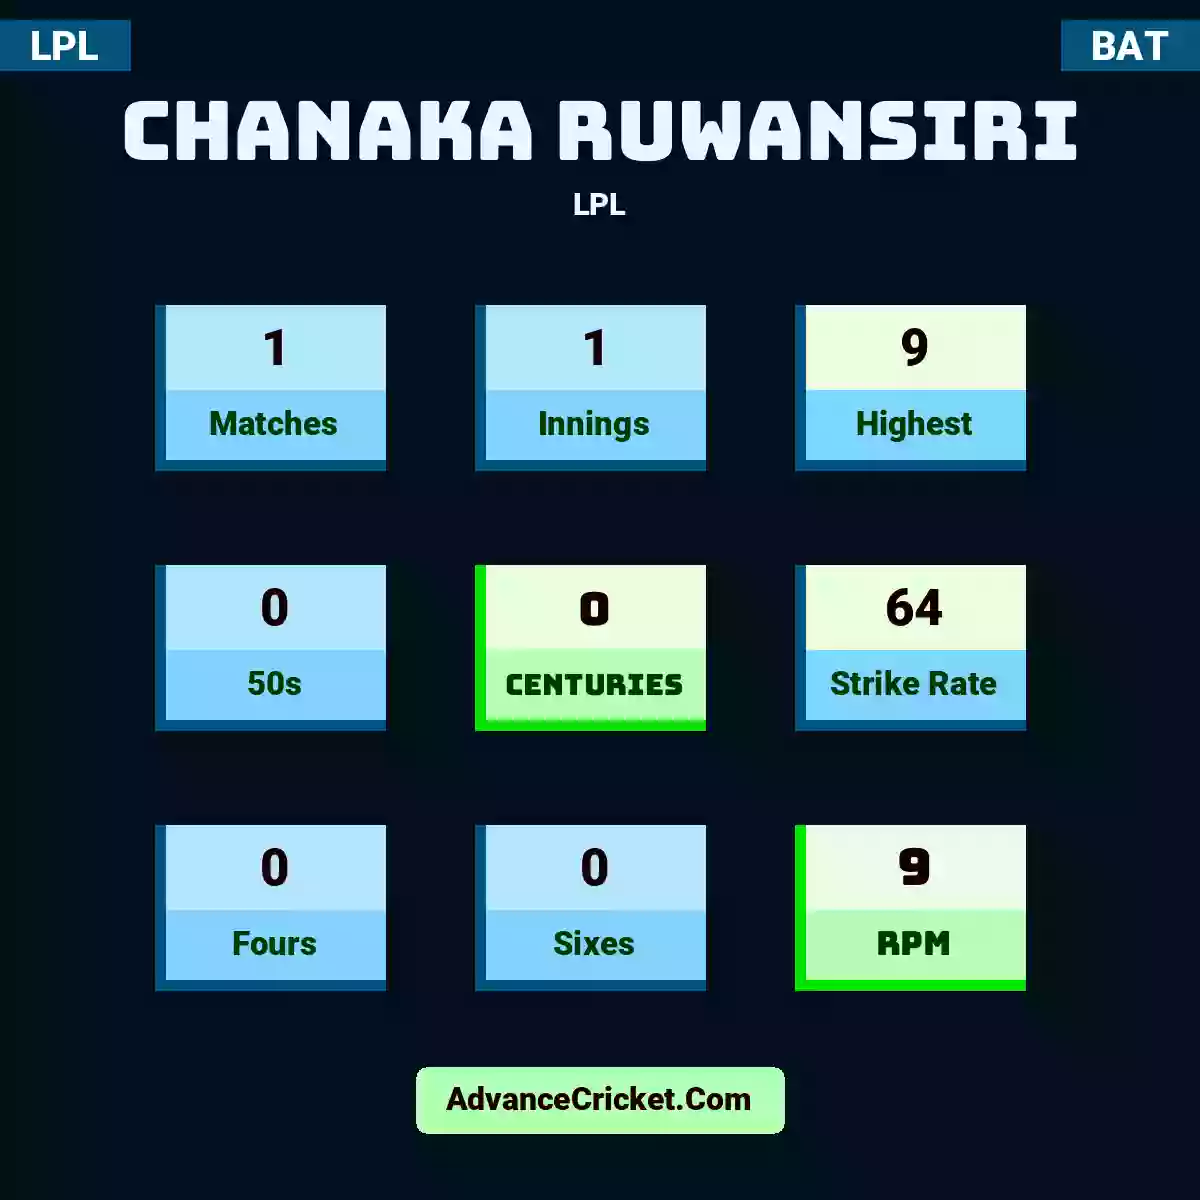 Chanaka Ruwansiri LPL , Chanaka Ruwansiri played 1 matches, scored 9 runs as highest, 0 half-centuries, and 0 centuries, with a strike rate of 64. C.Ruwansiri hit 0 fours and 0 sixes, with an RPM of 9.